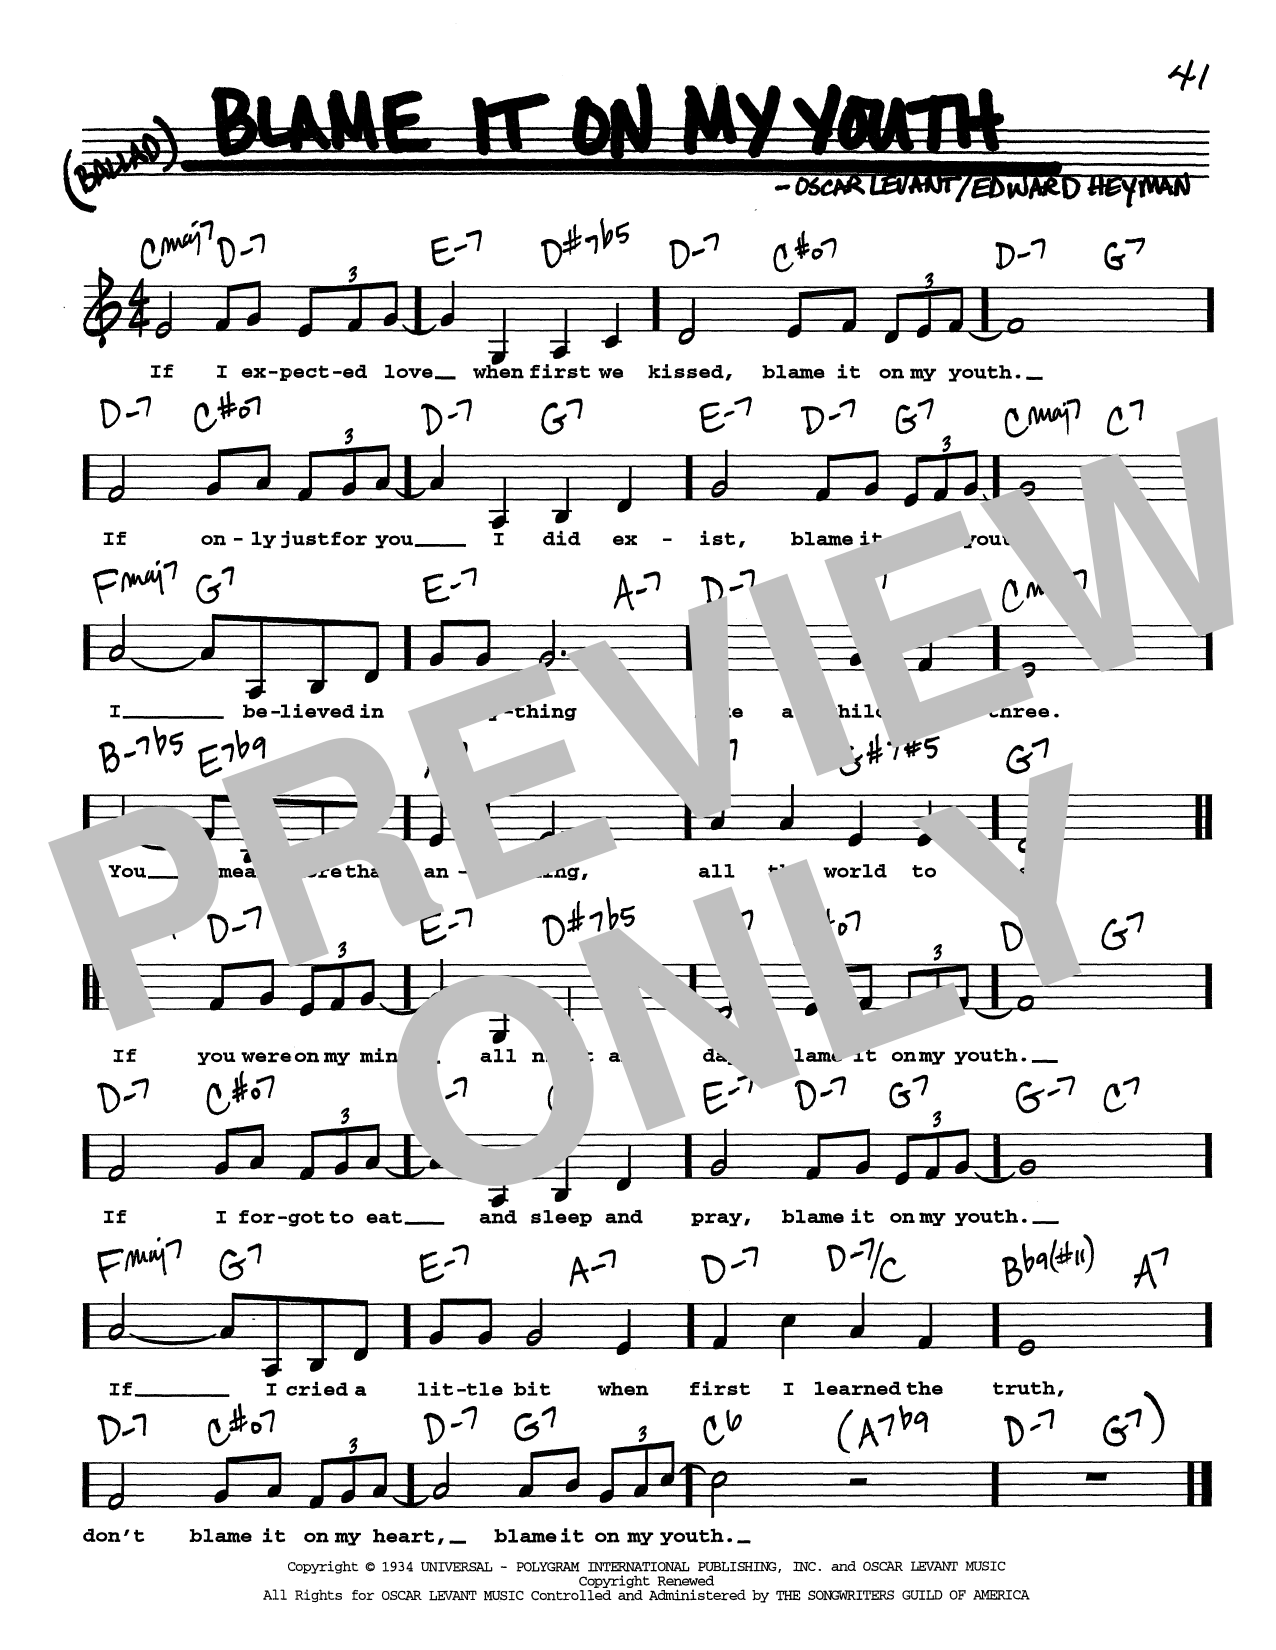 Edward Heyman Blame It On My Youth (Low Voice) sheet music notes printable PDF score